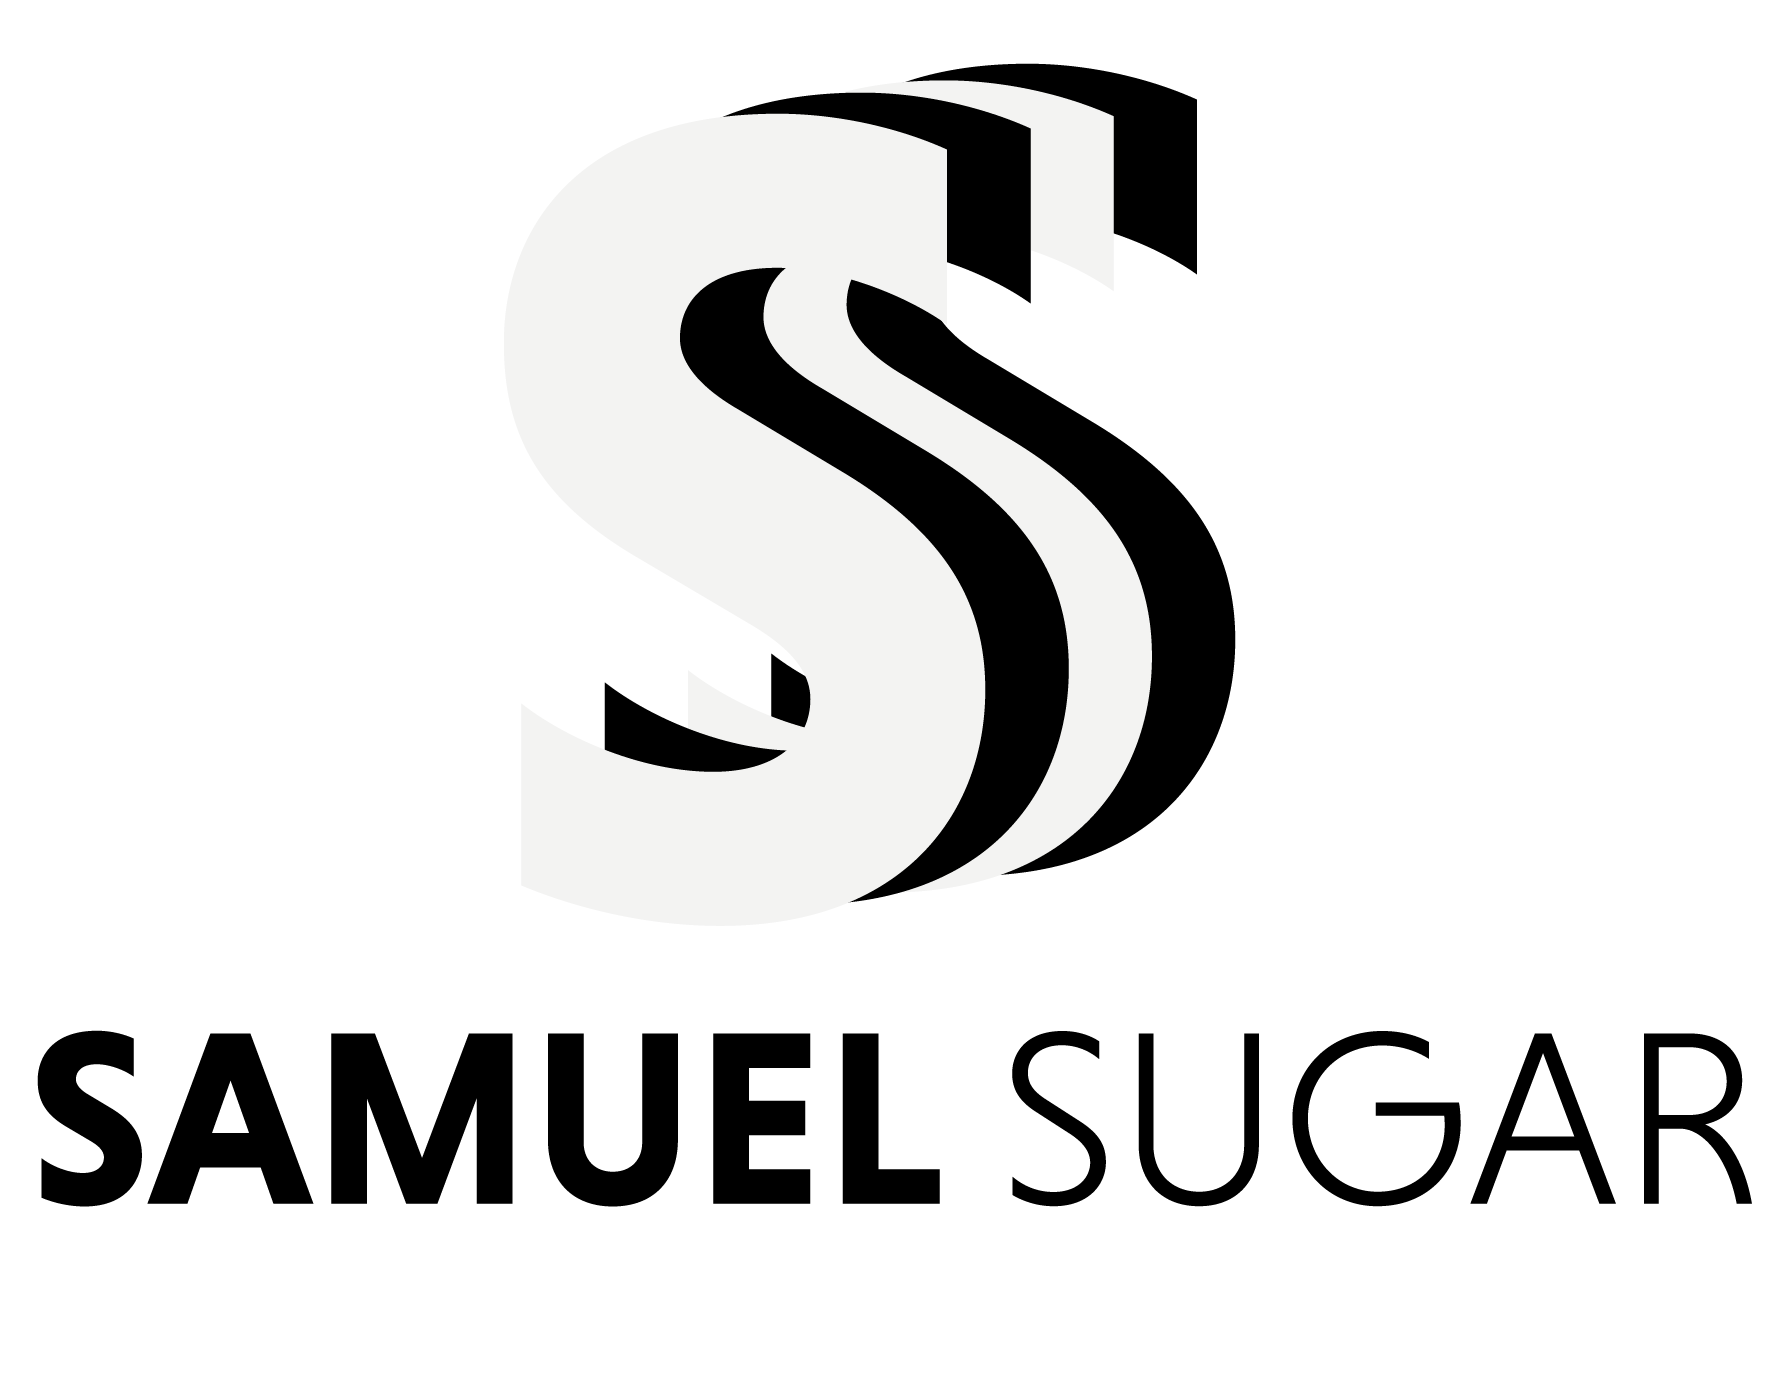 Samuel Sugar